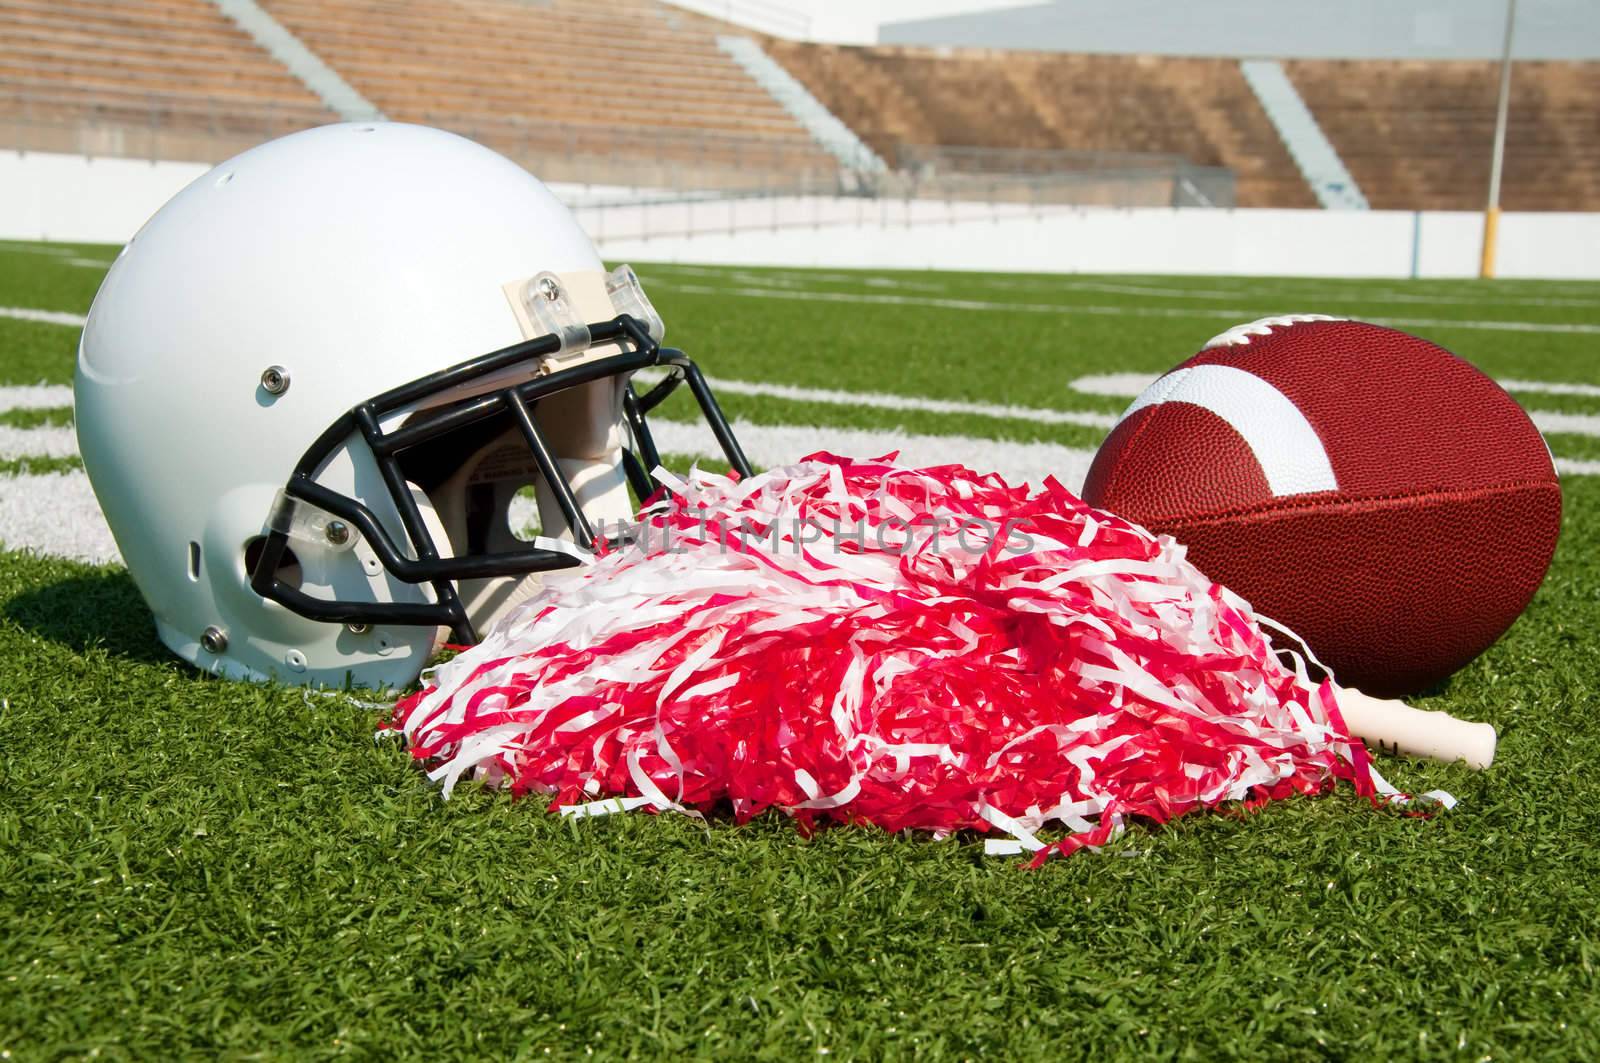 American football, helmet, and pom poms on field in stadium.